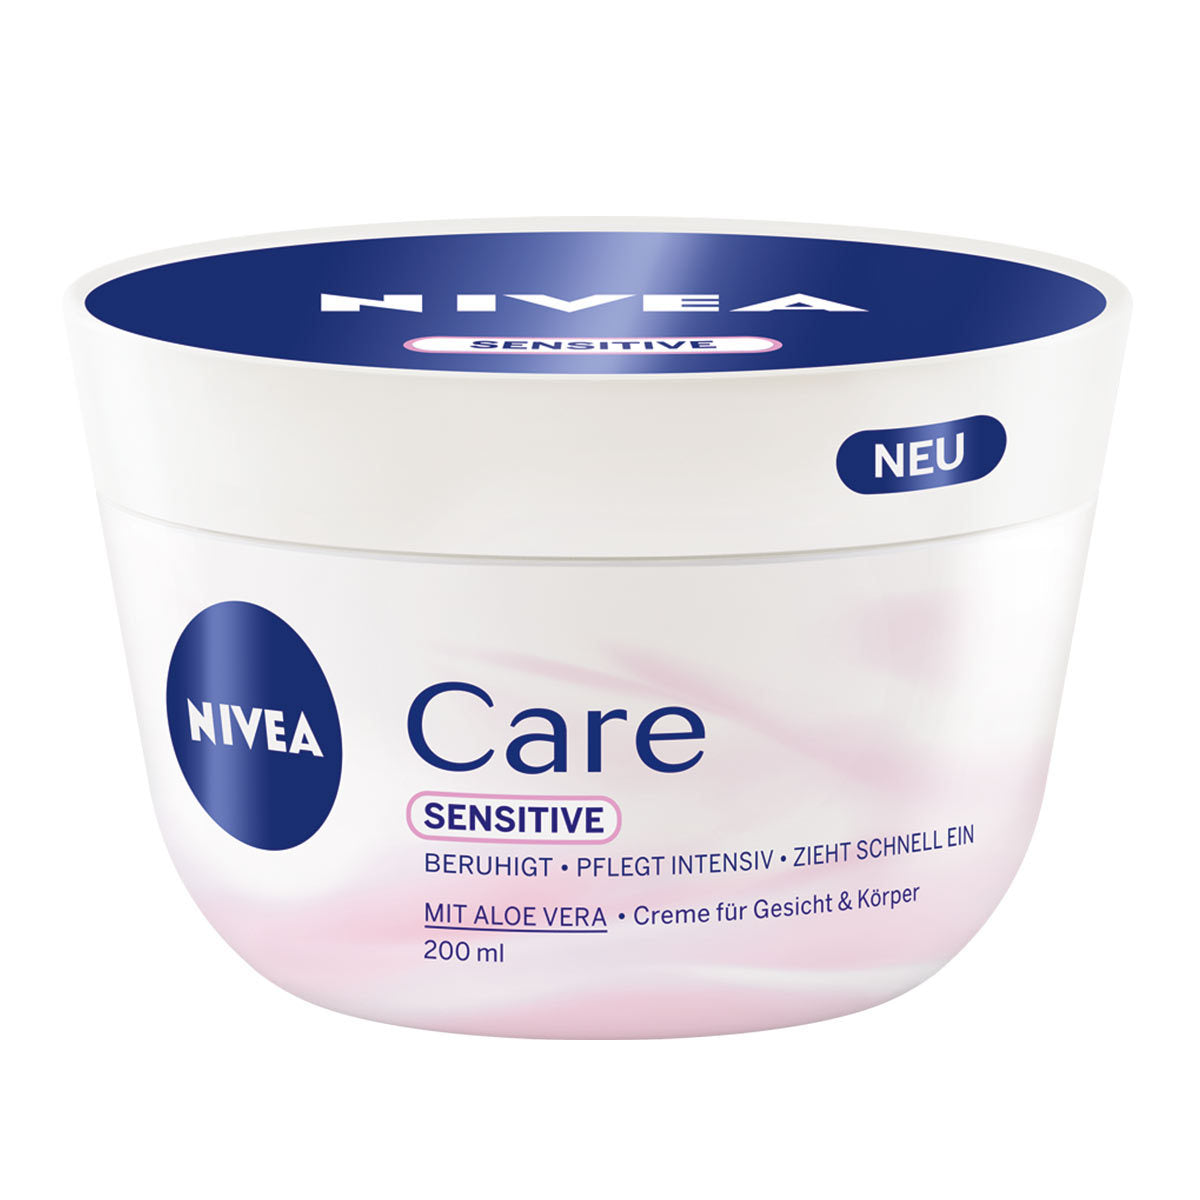 Primary image of Cream Care Sensitive